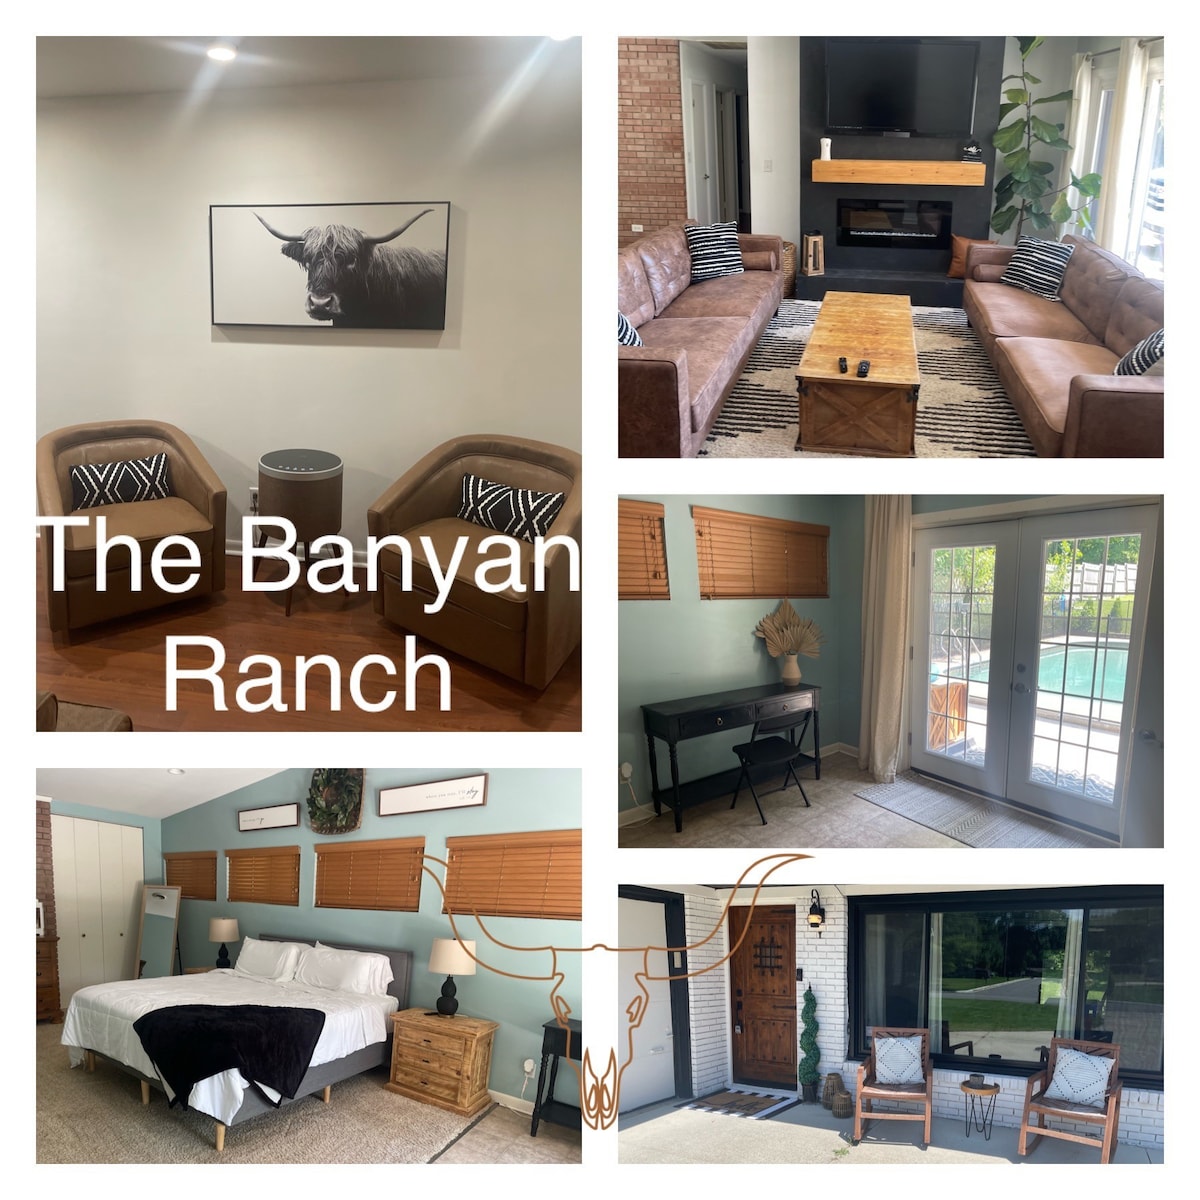 The Banyon Ranch!